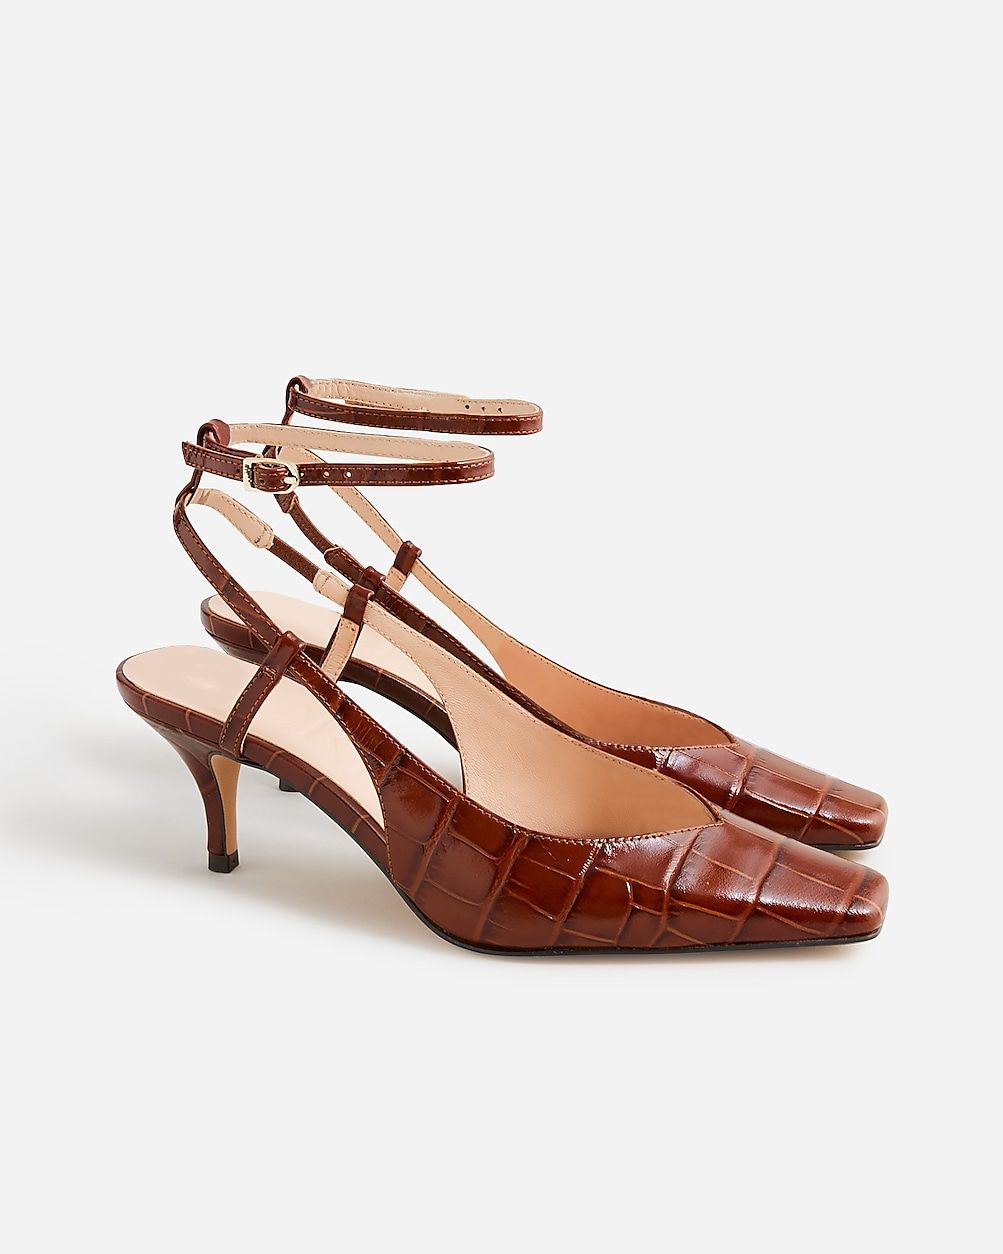 Leona ankle-strap heels in croc-embossed leather | J.Crew US